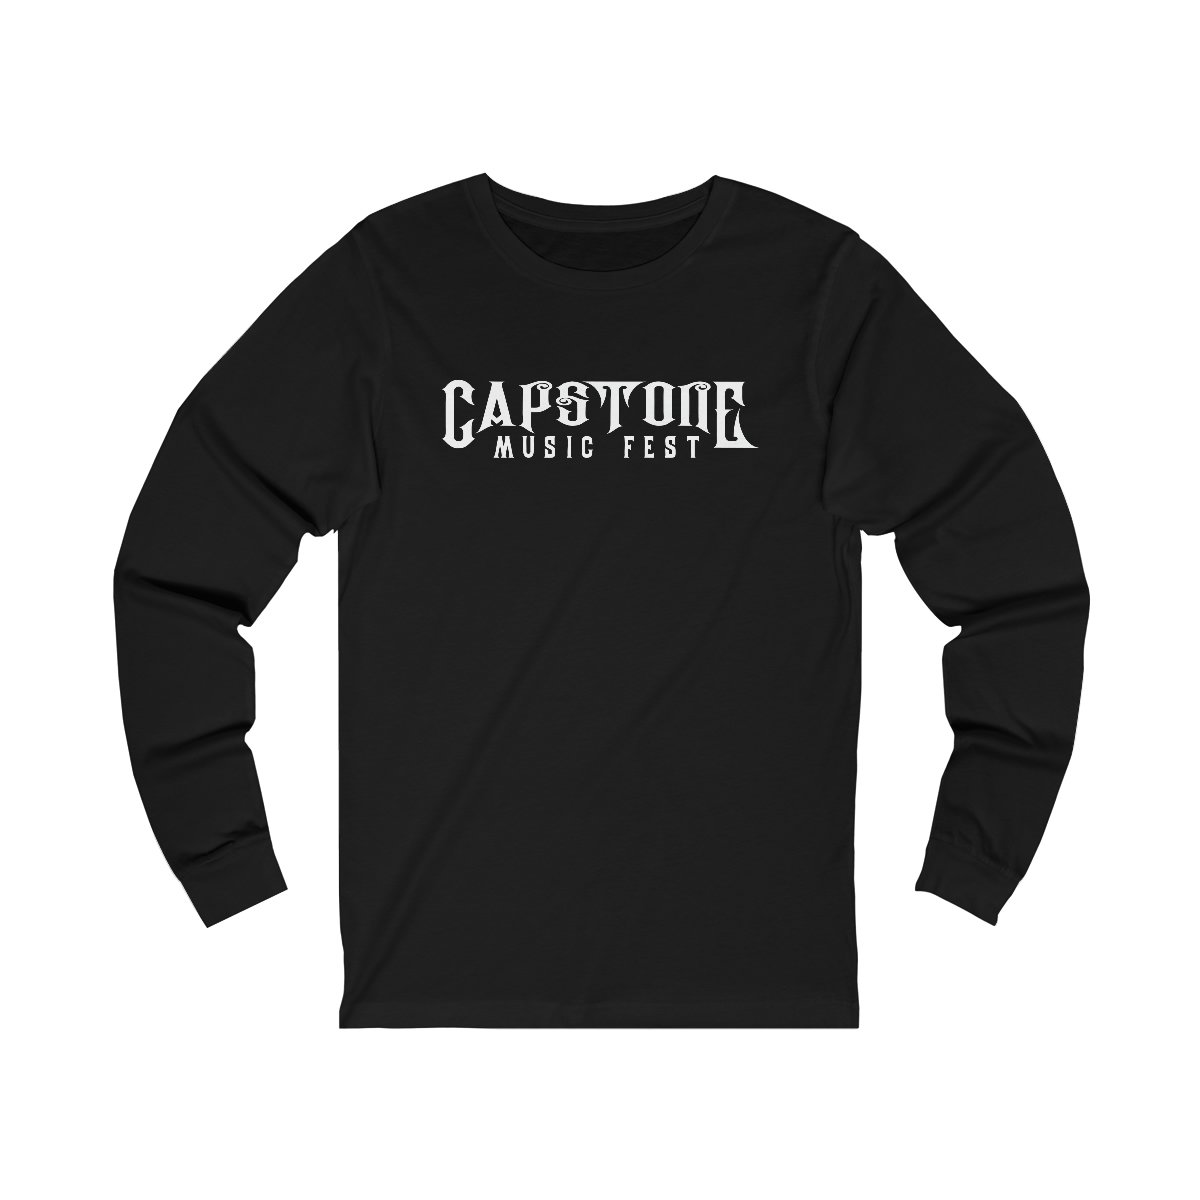 Capstone Music Fest Long Sleeve Tshirt